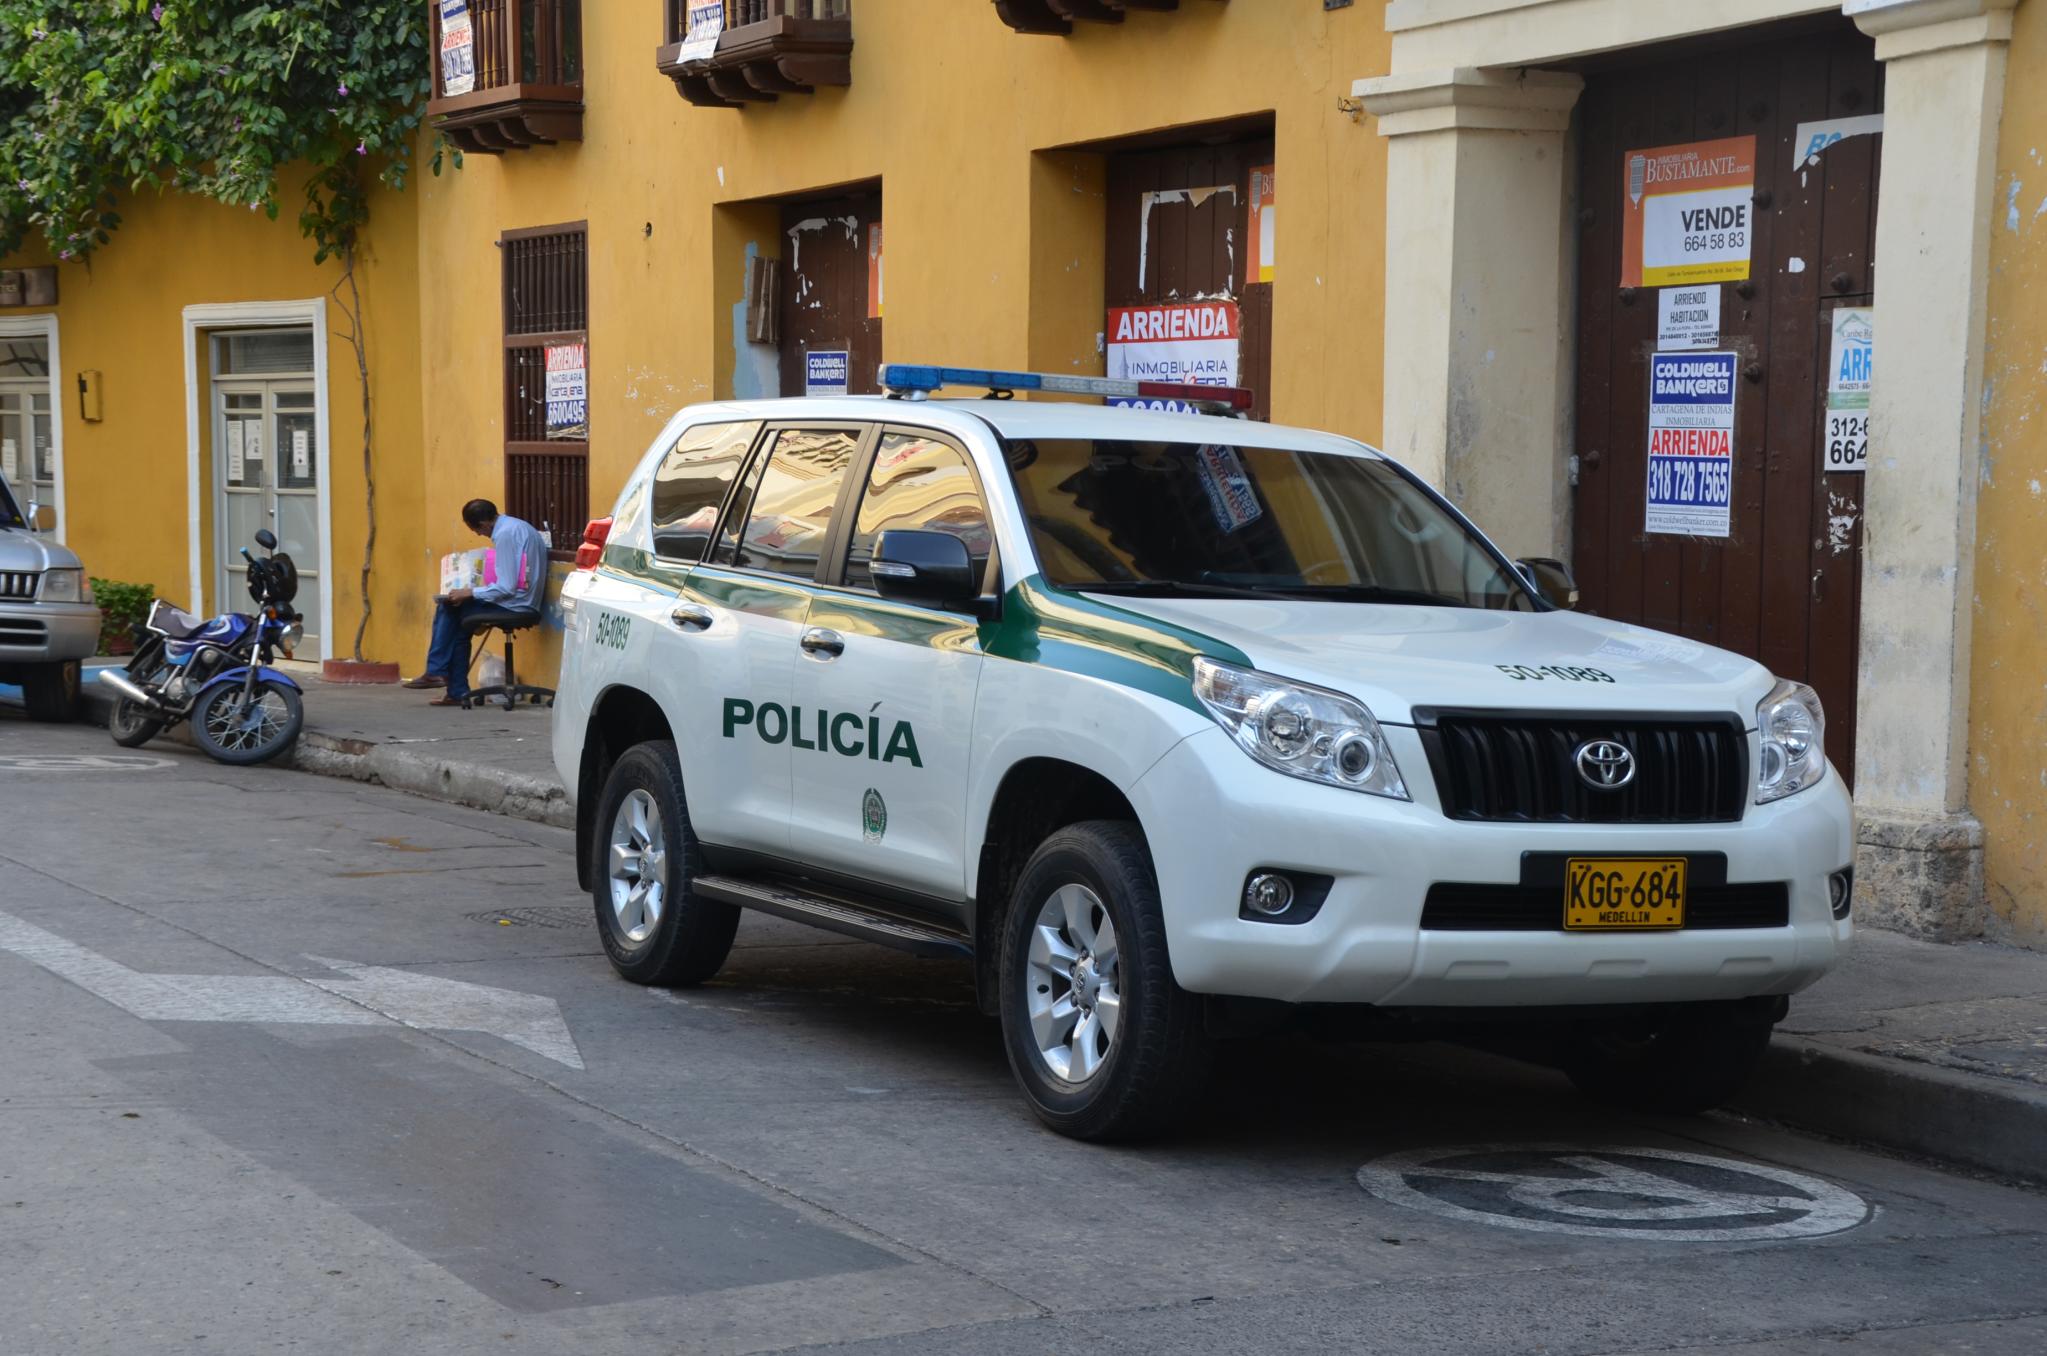 Полиция Колумбии